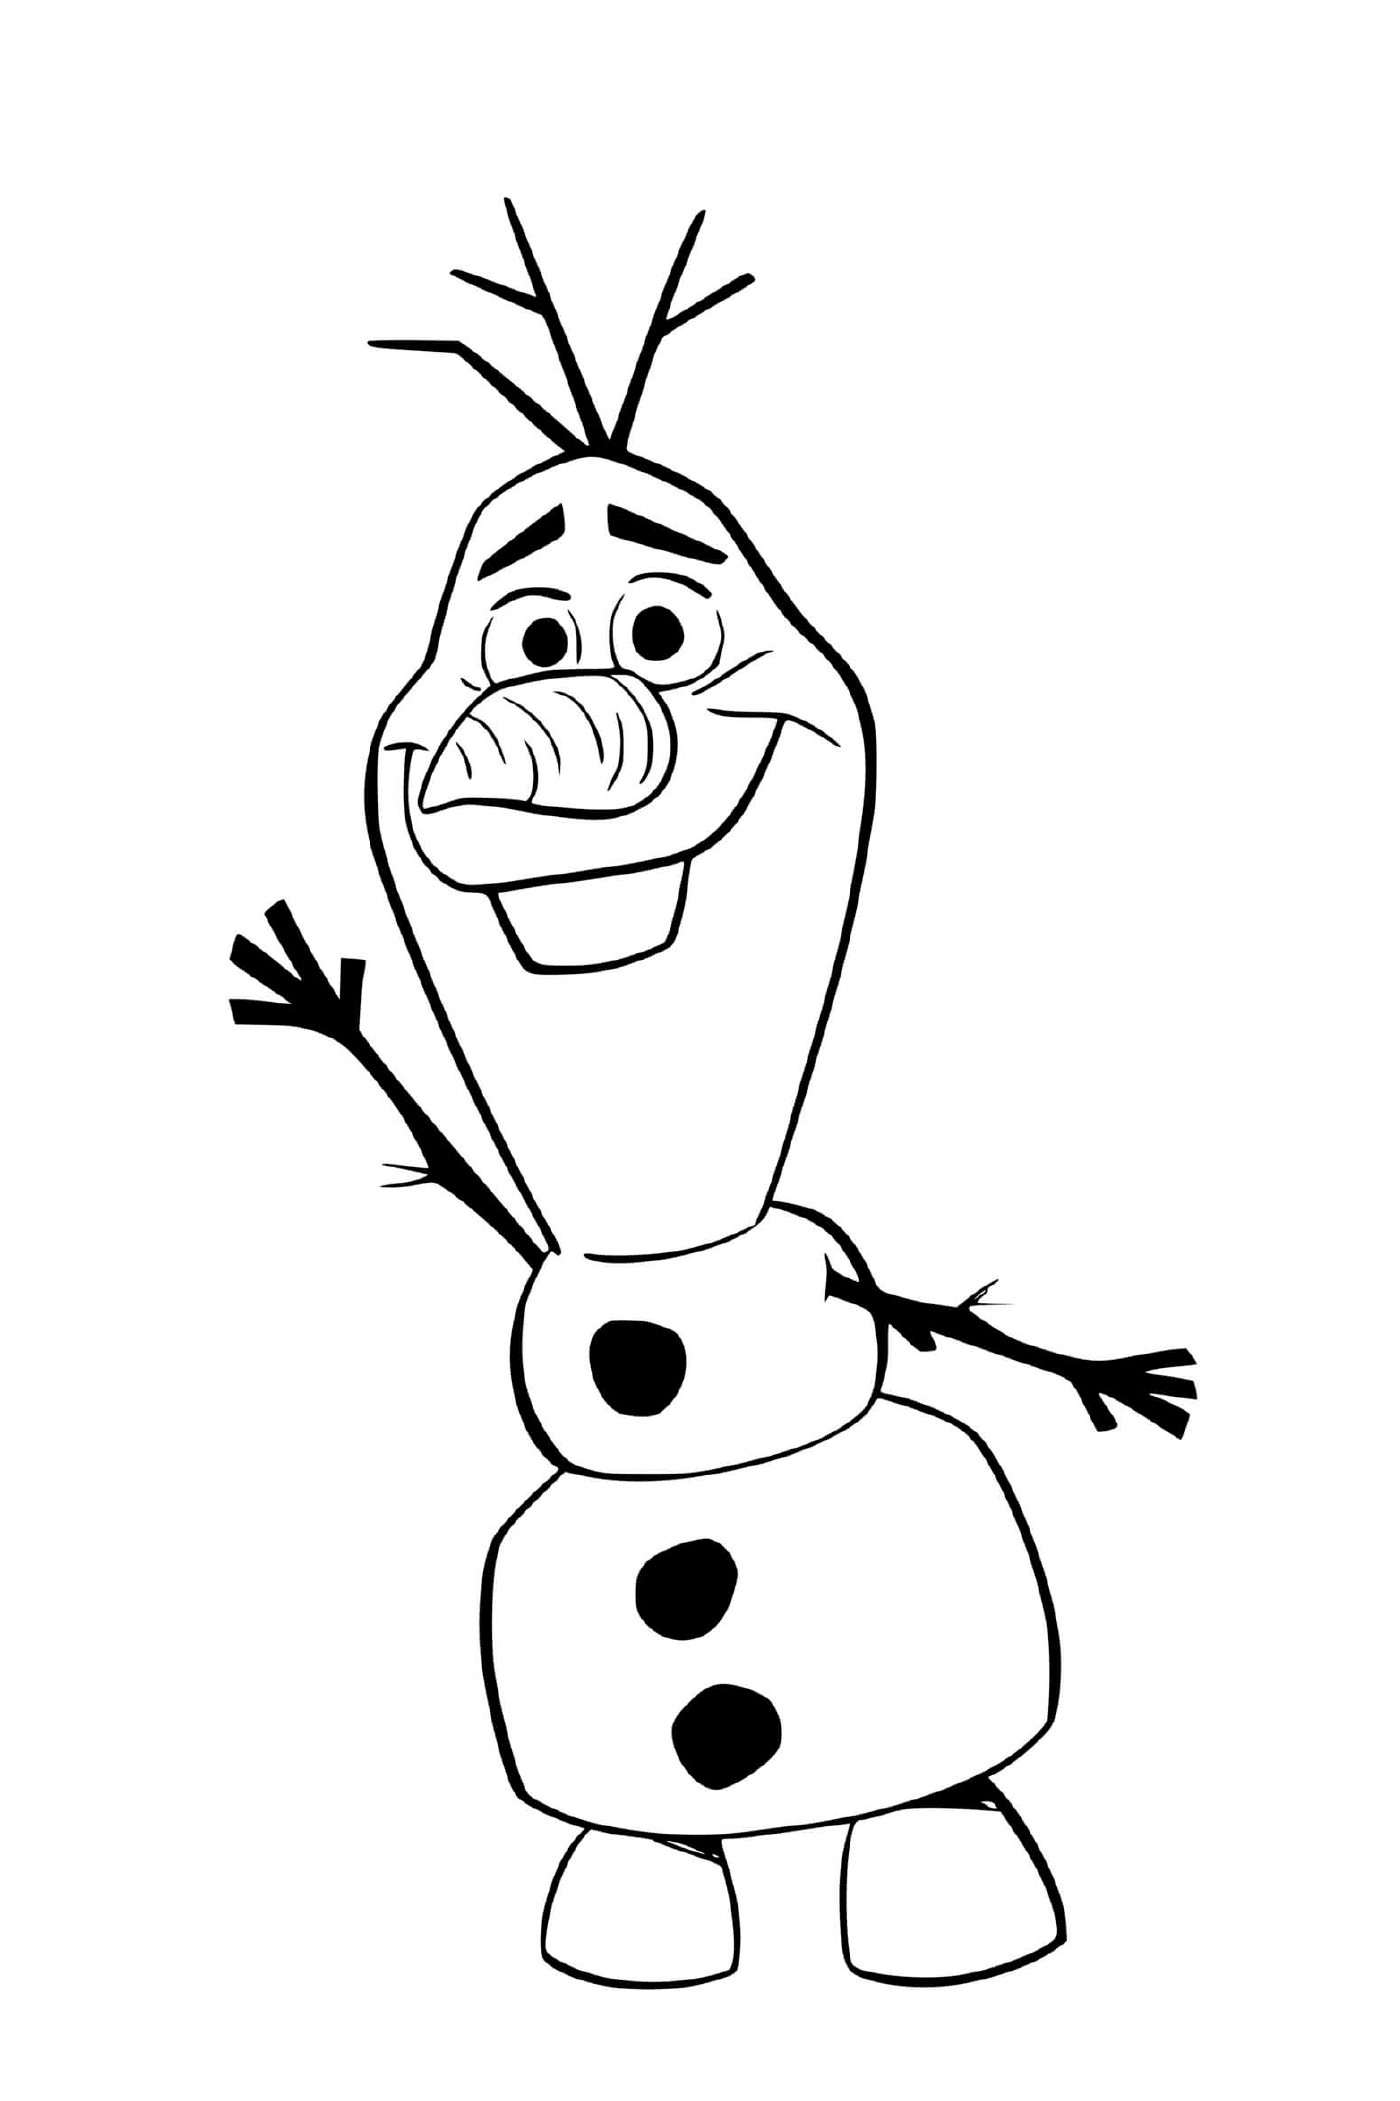  Olaf im Königreich Arendelle 